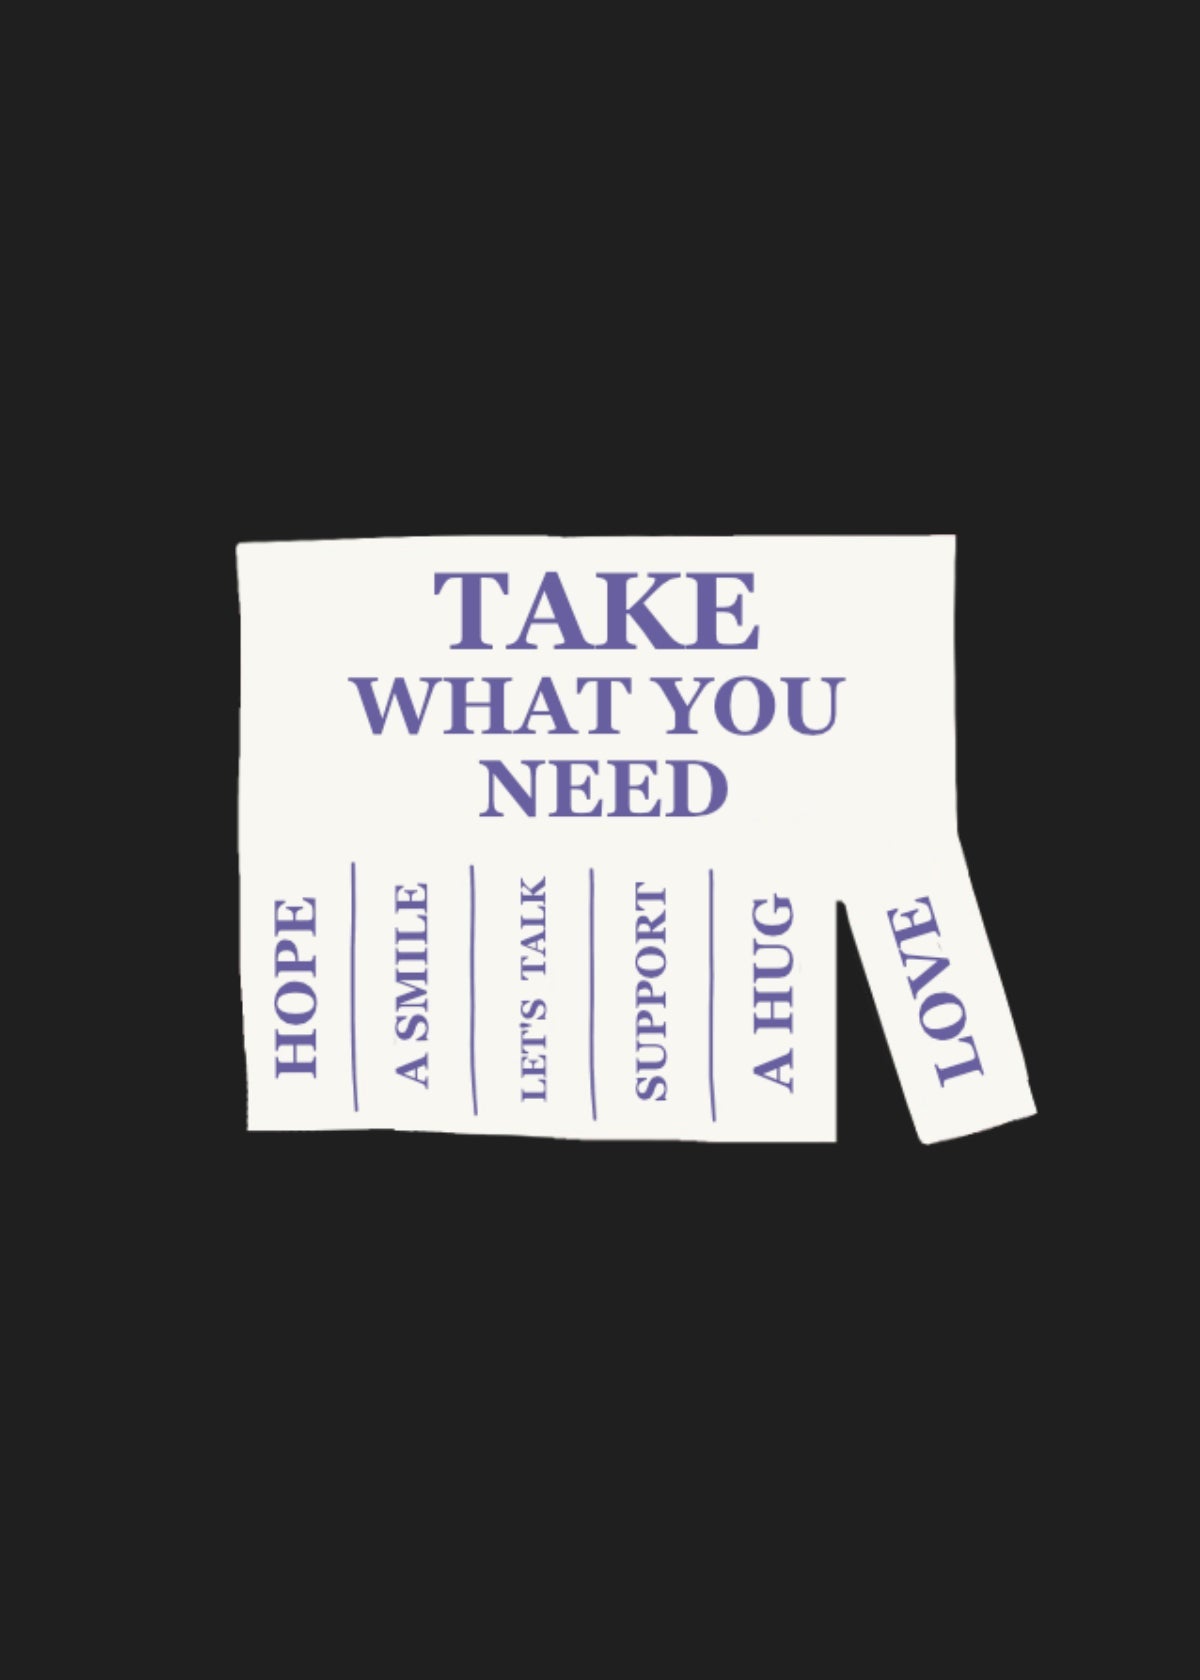 TAKE WHAT YOU NEED